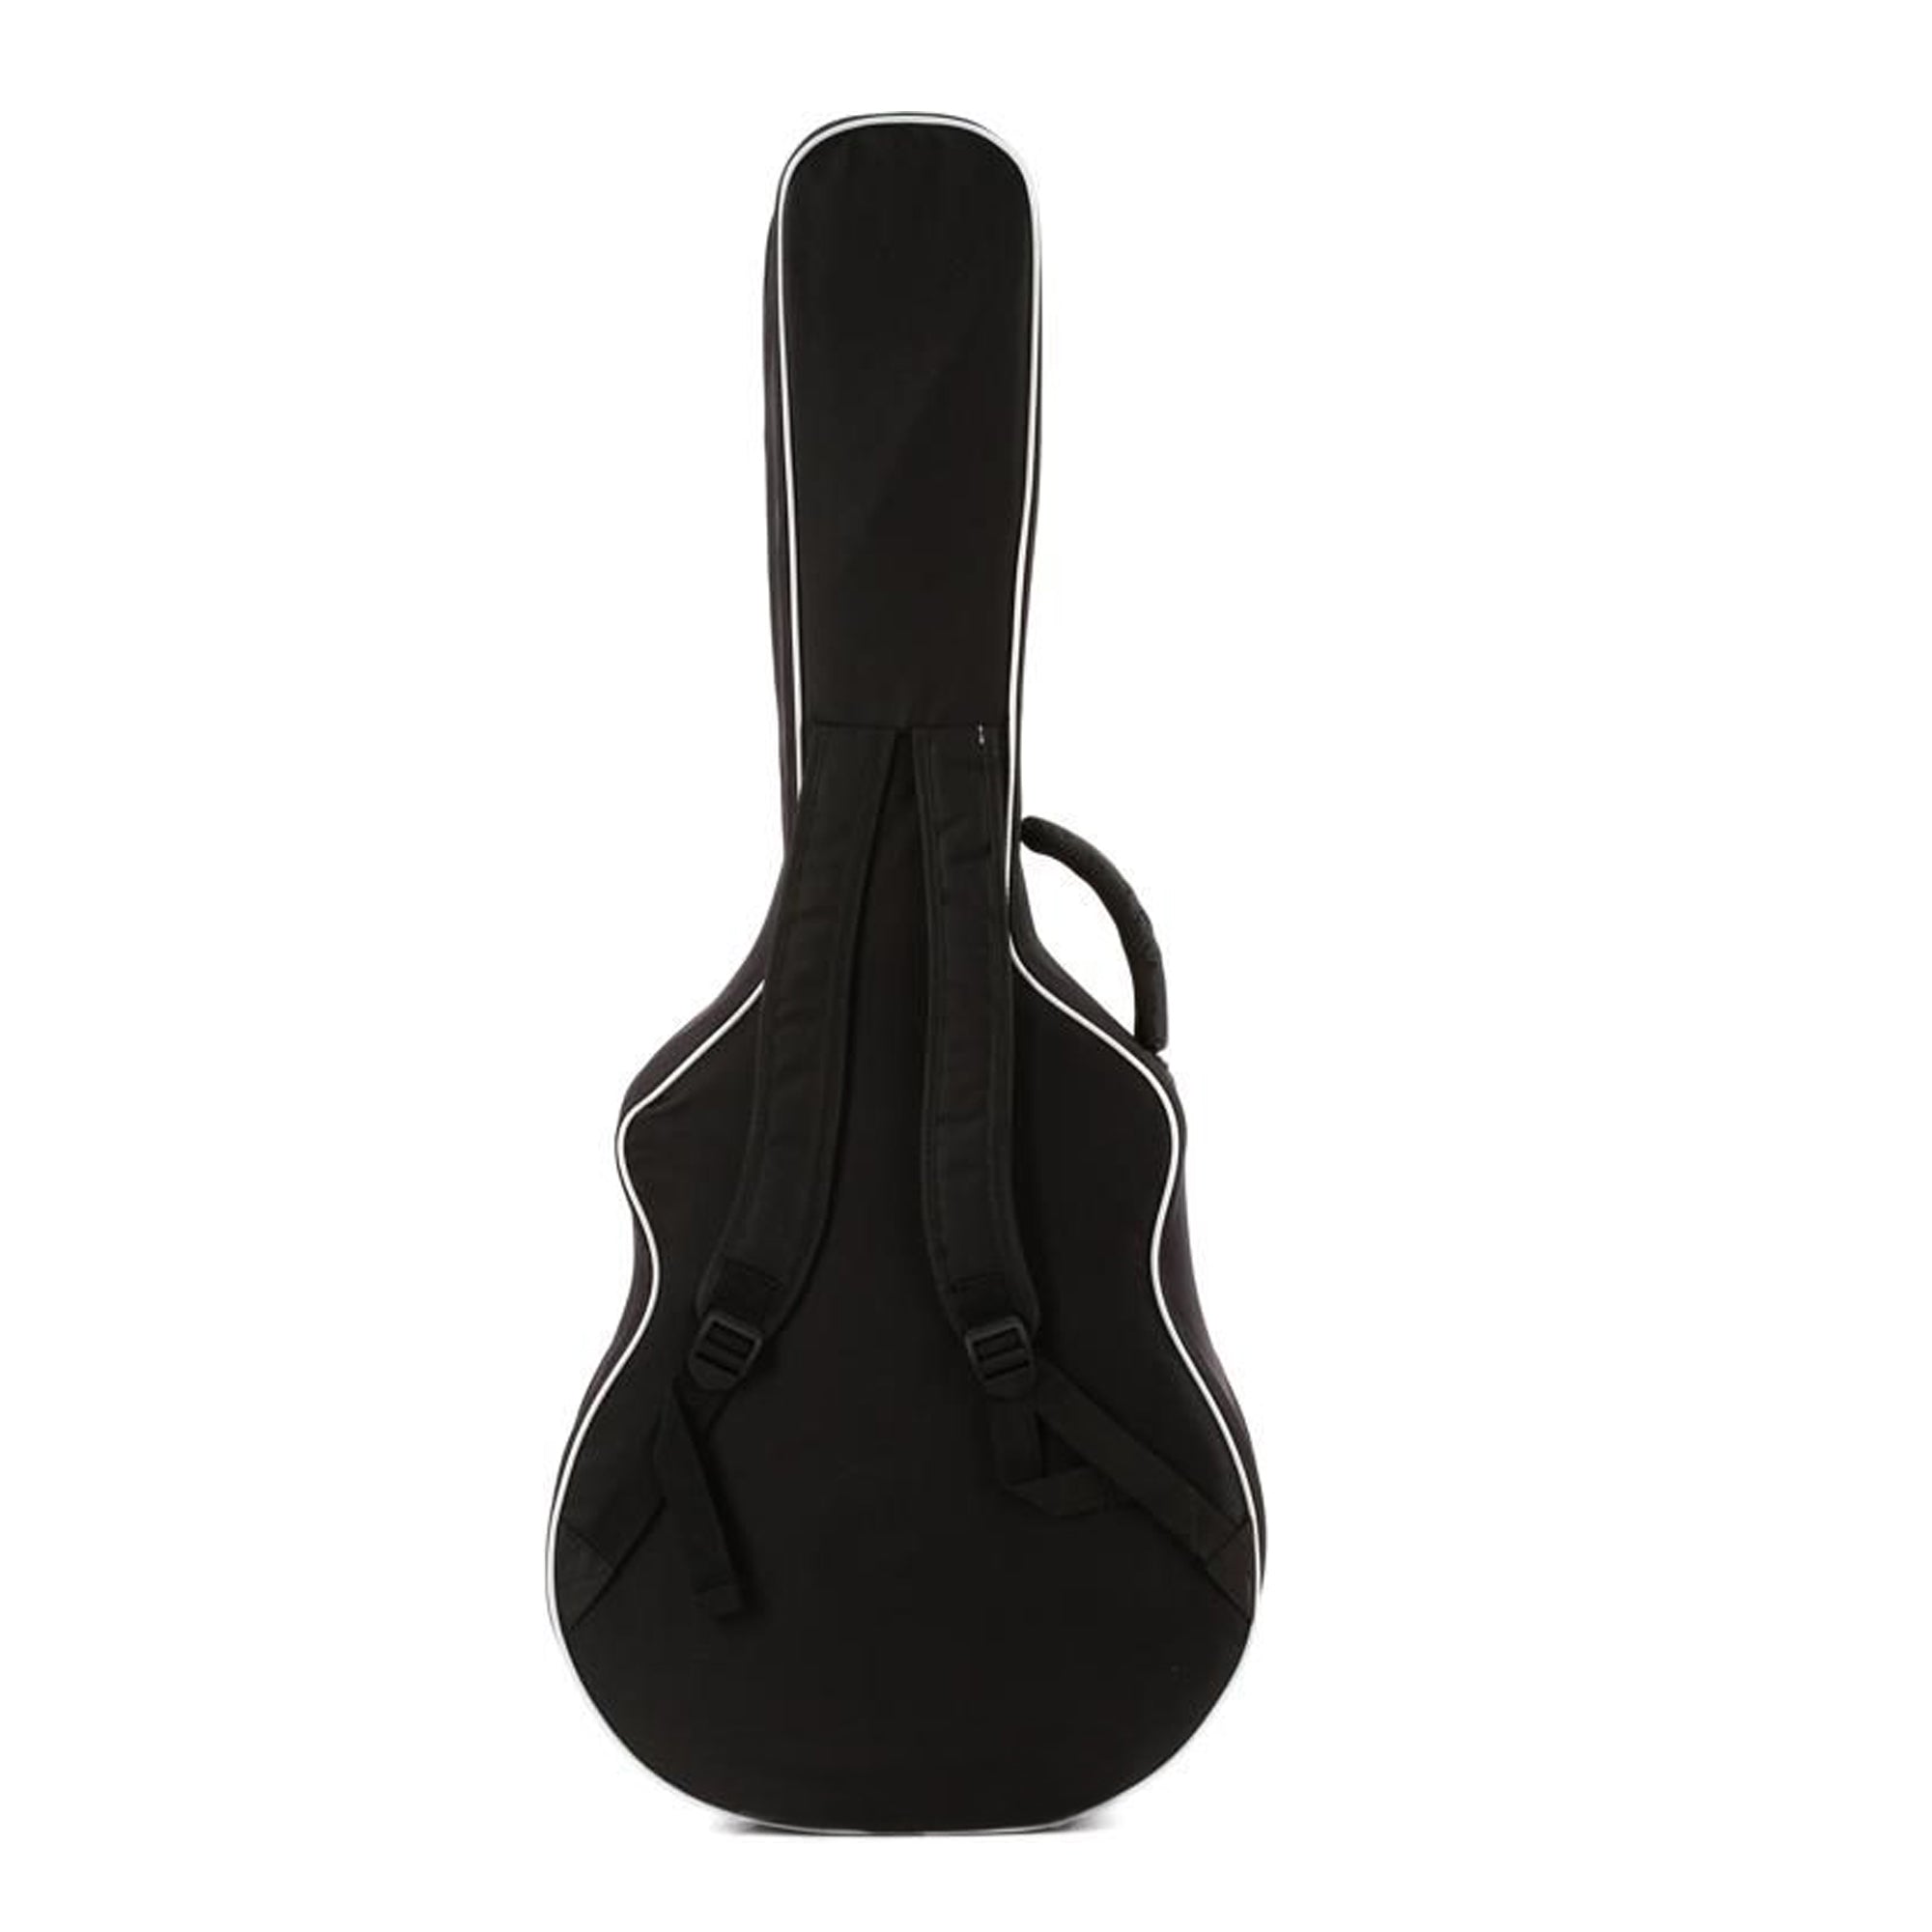 Epiphone Black Classic 940-CLSGIG Guitar Gig Bag